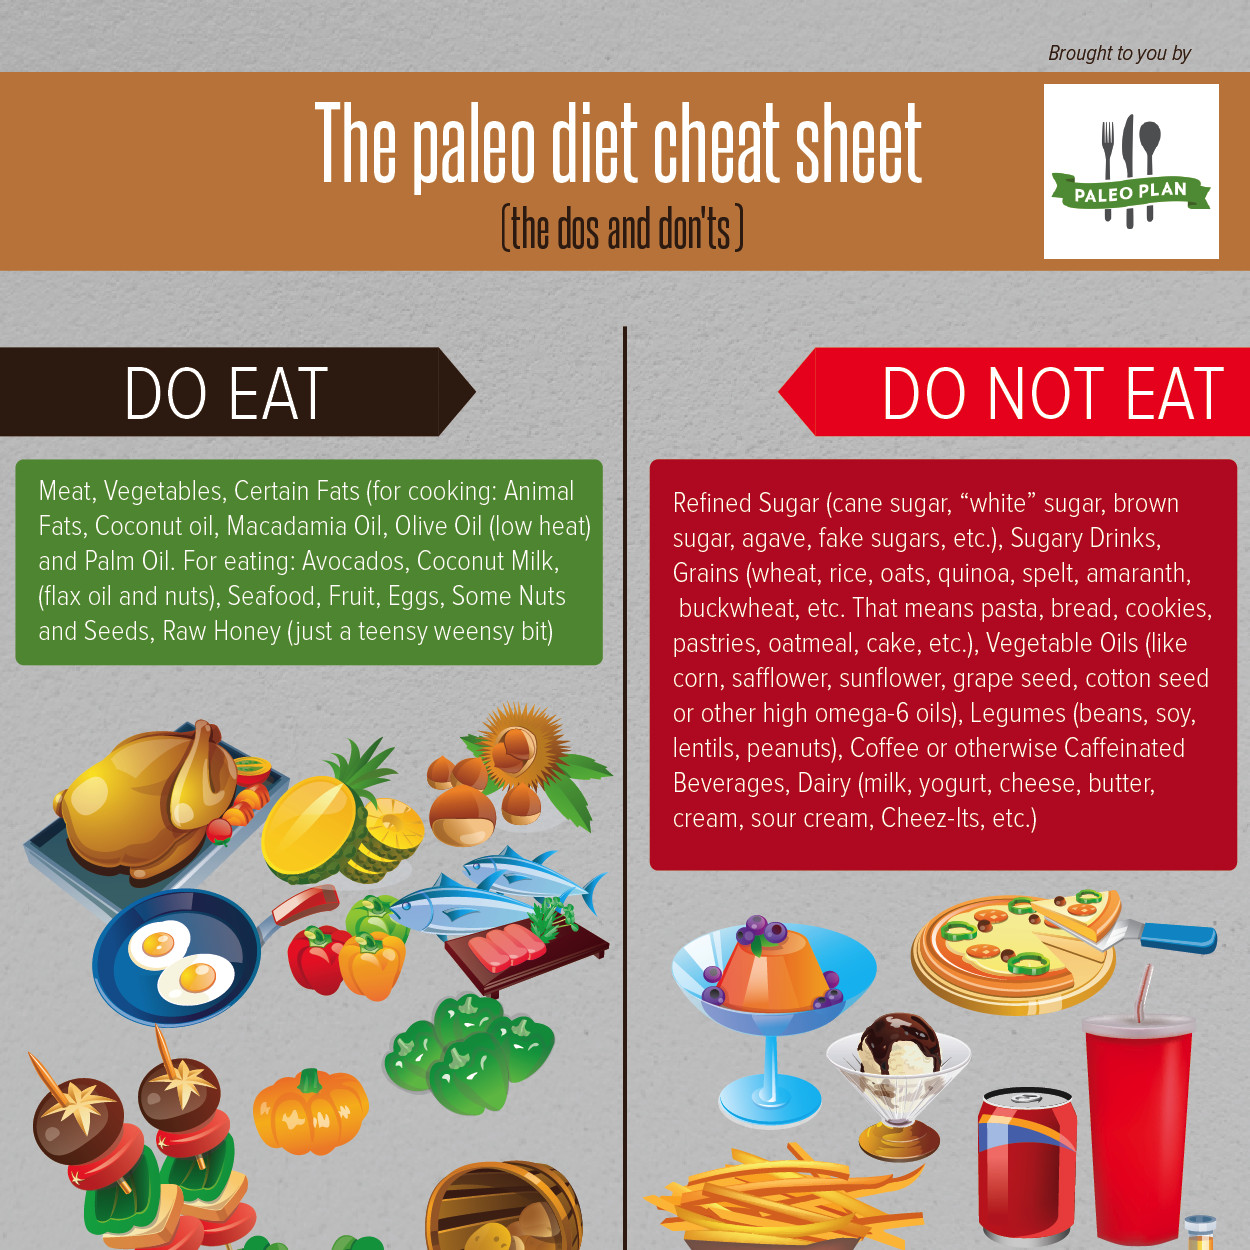 Paleo Diet Infographic
 The 9 Best Paleo Diet Infographics [ROUNDUP] Paleo Diet